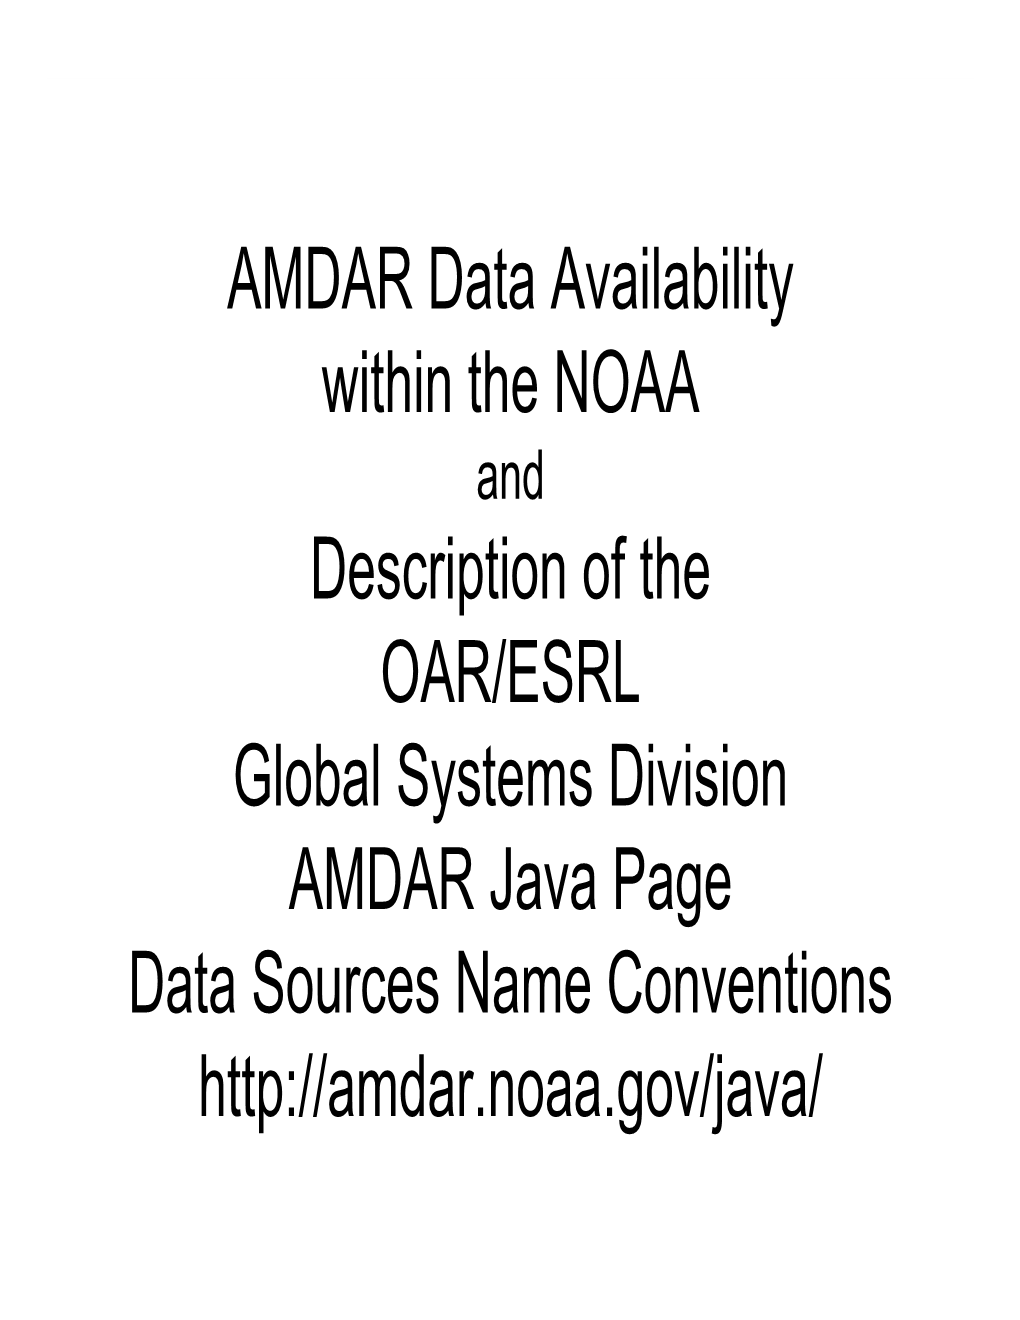 AMDAR Data Sources Explained